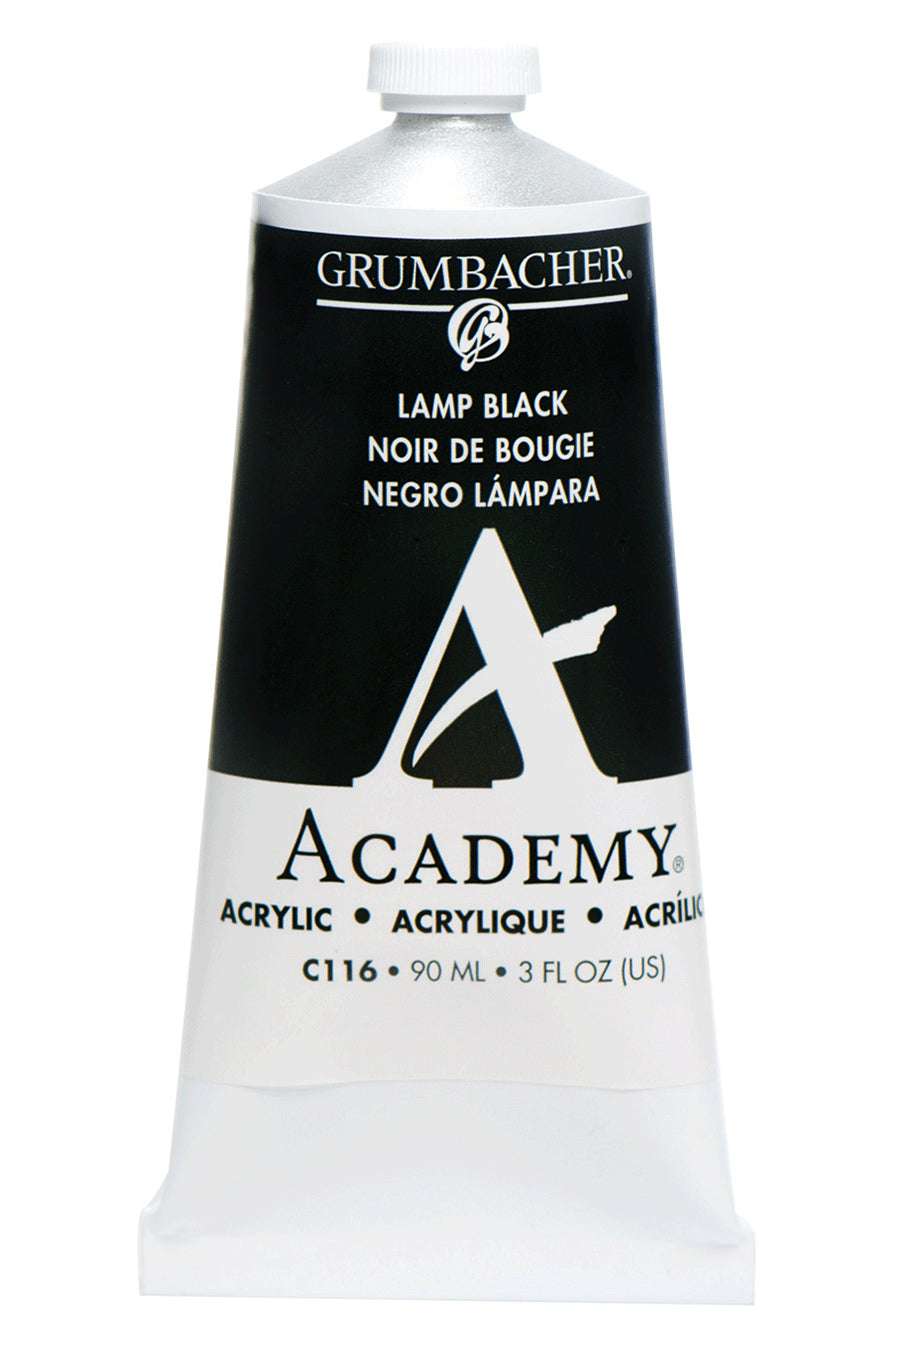 Grumbacher Mars Black Acrylic Paint Academy Color 150 mL - 5.07 FL OZ C13411